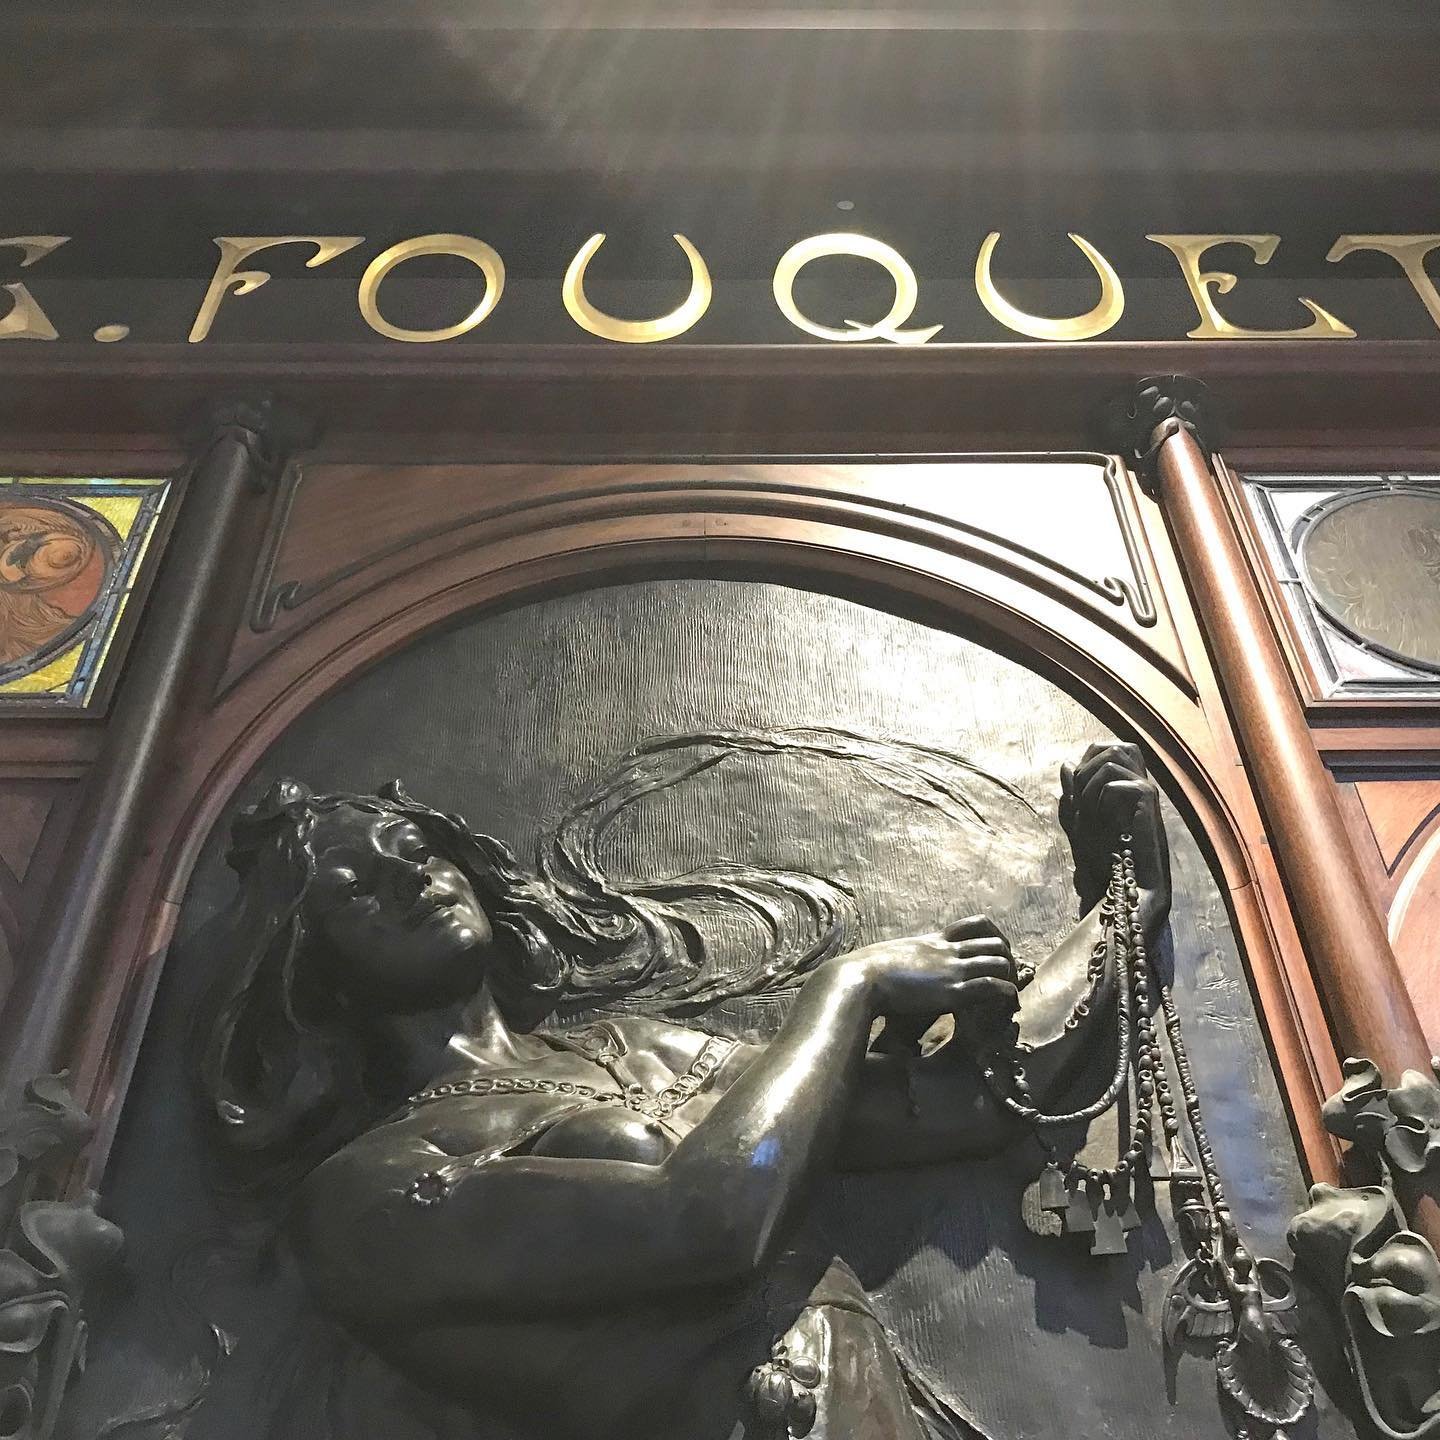 Fouquet-Carnavalet-Jewelry-Storefront.jpg